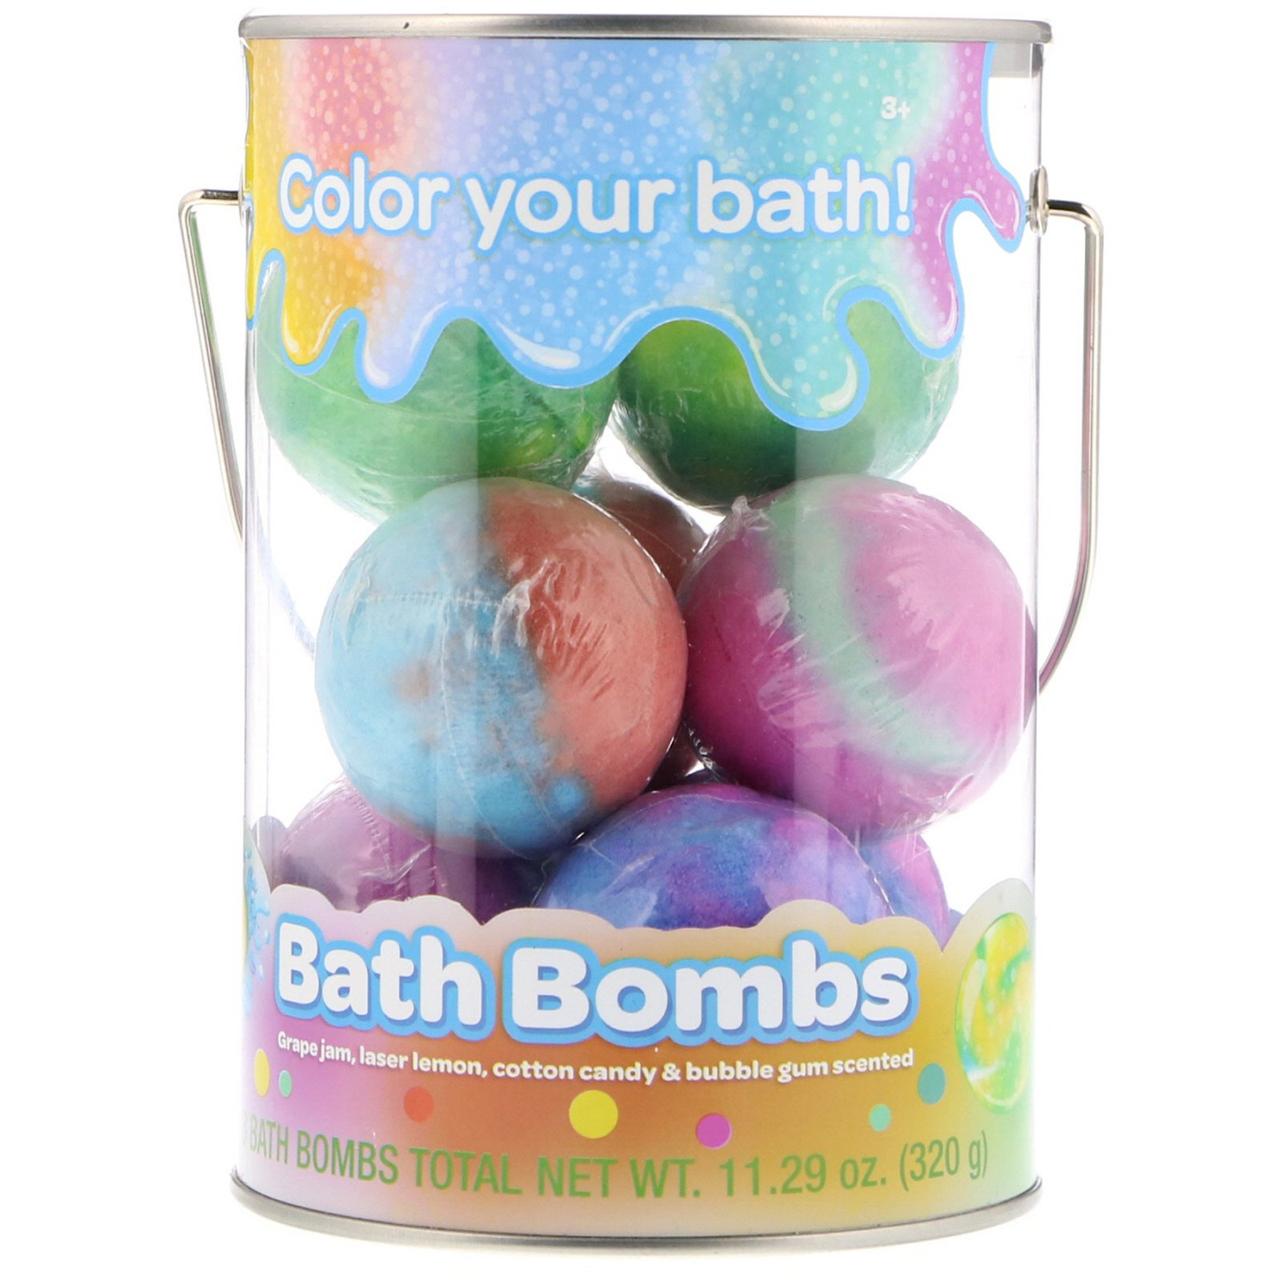 Crayola, Bath Bombs, Grape Jam, Laser Lemon, Cotton Candy & Bubble Gum Scented , 8 Bath Bombs, 11.29 oz (320